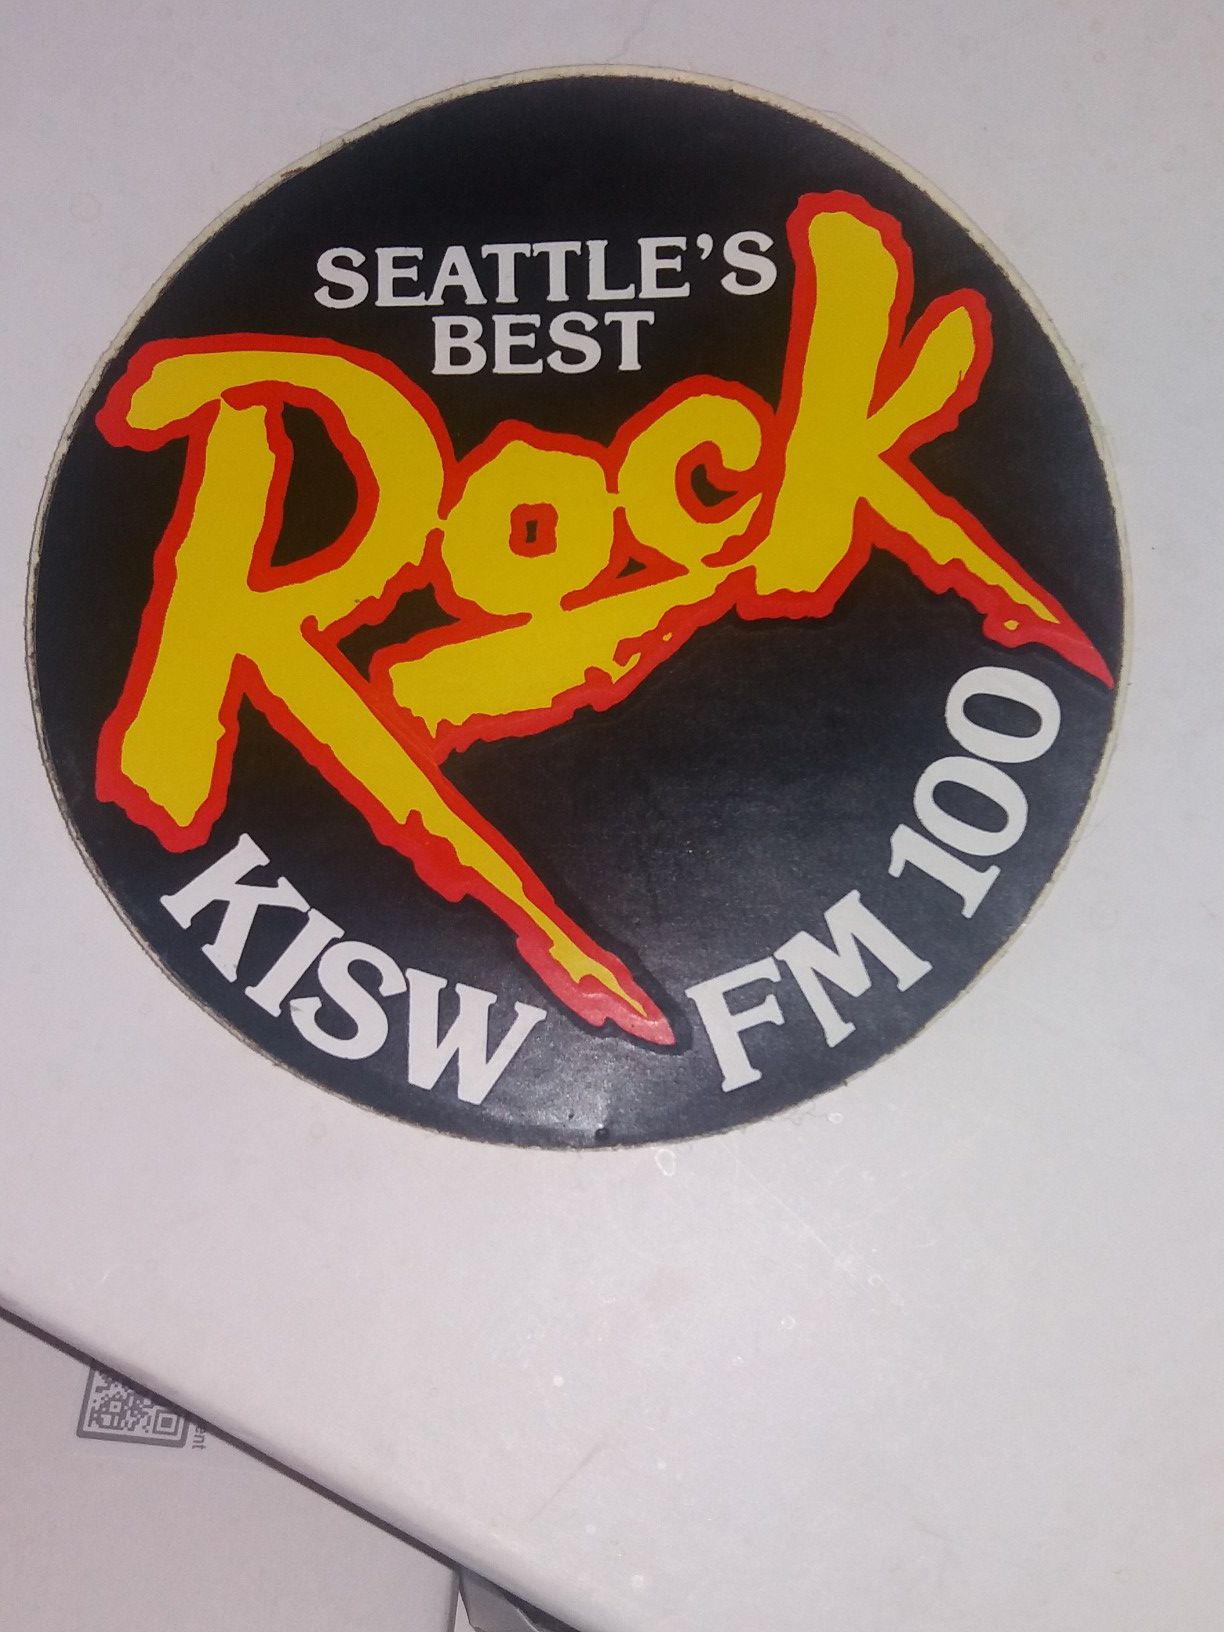 Vintage Seattle S Best Rock Sticker ☆kisw Fm 100☆ For Sale In Tacoma Wa Offerup